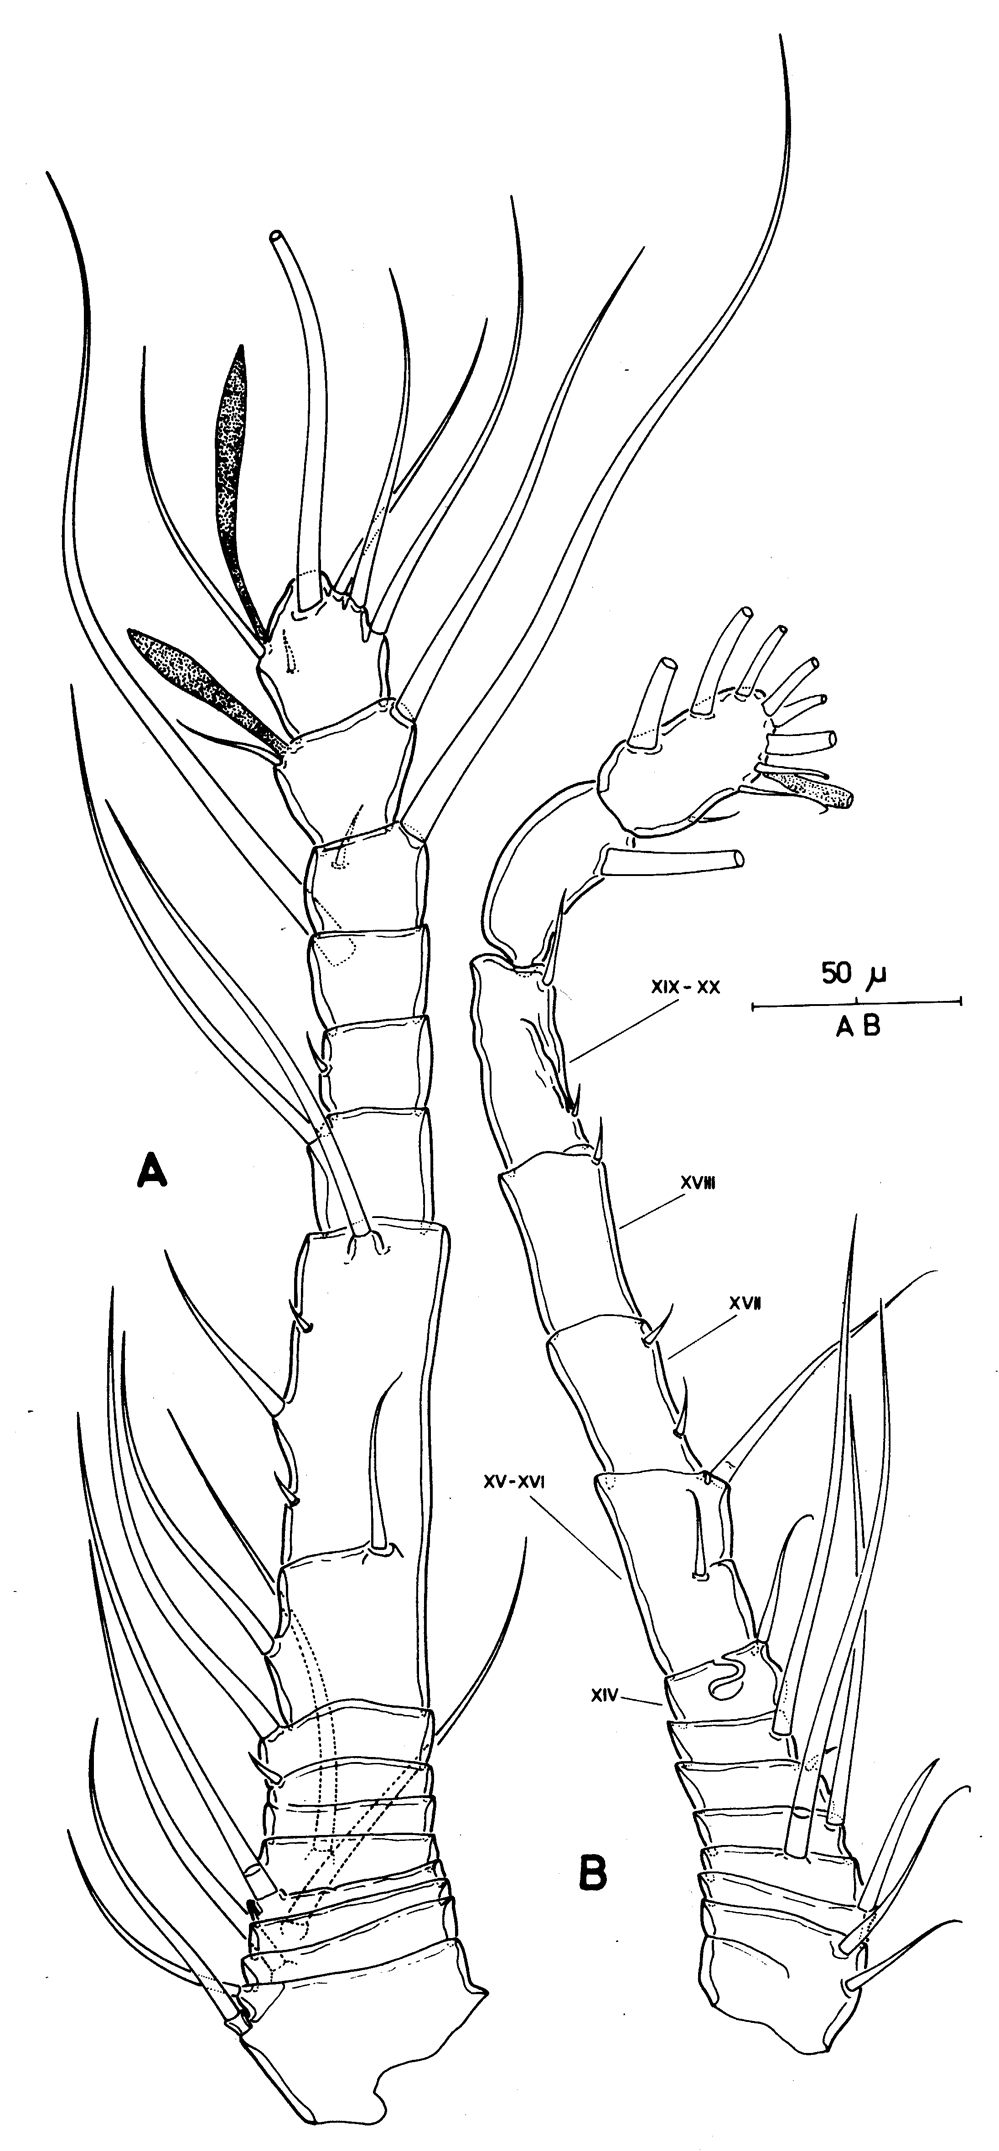 Species Thaumatopsyllus paradoxus - Plate 4 of morphological figures